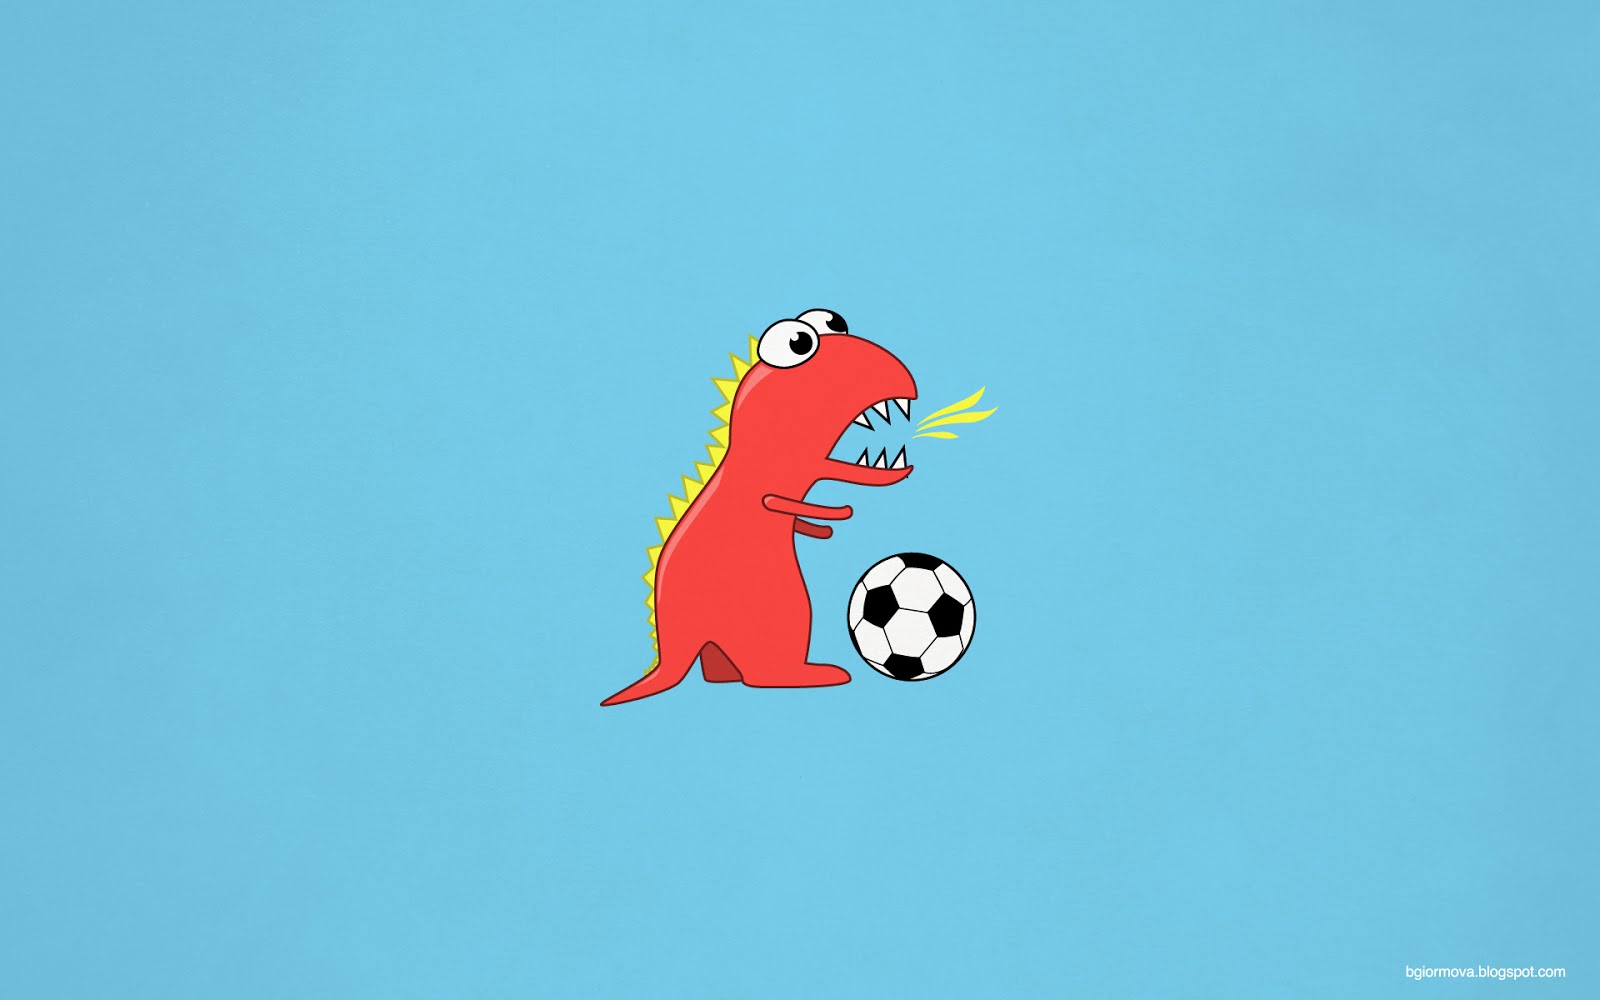 My Grinning Mind Funny Cartoon Dinosaur Playing Soccer